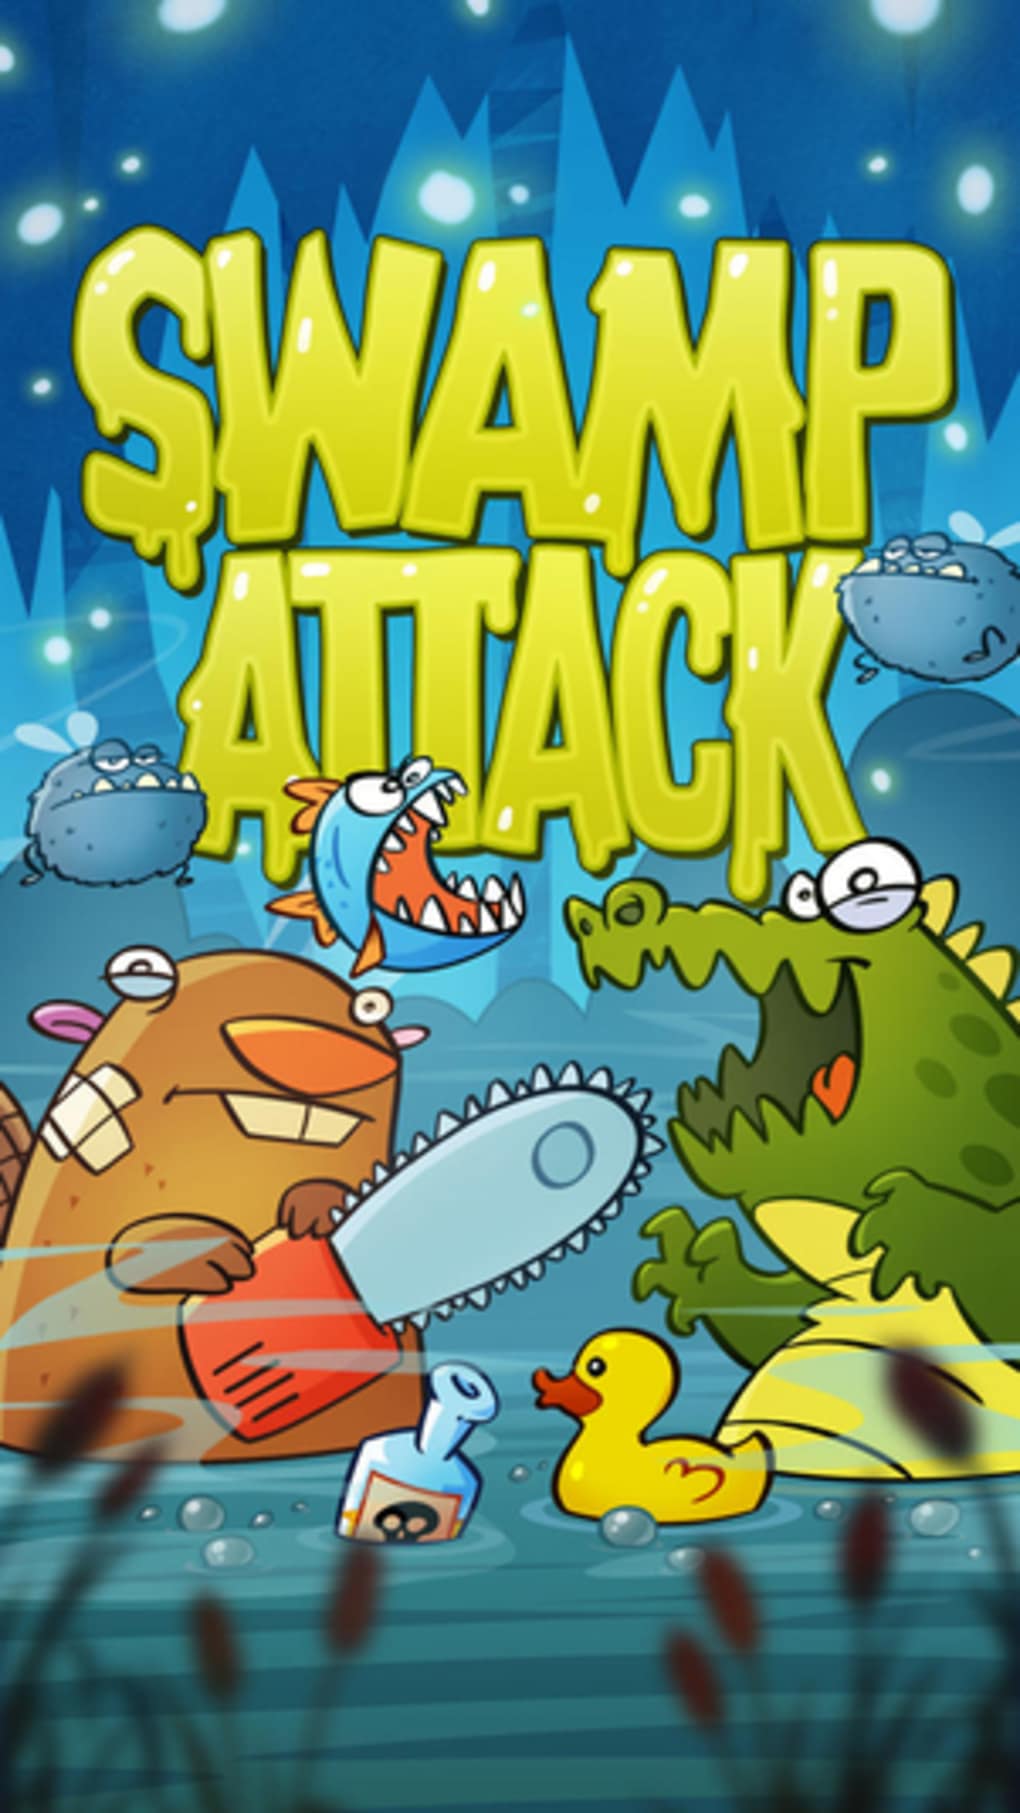 free instals Swamp Attack 2